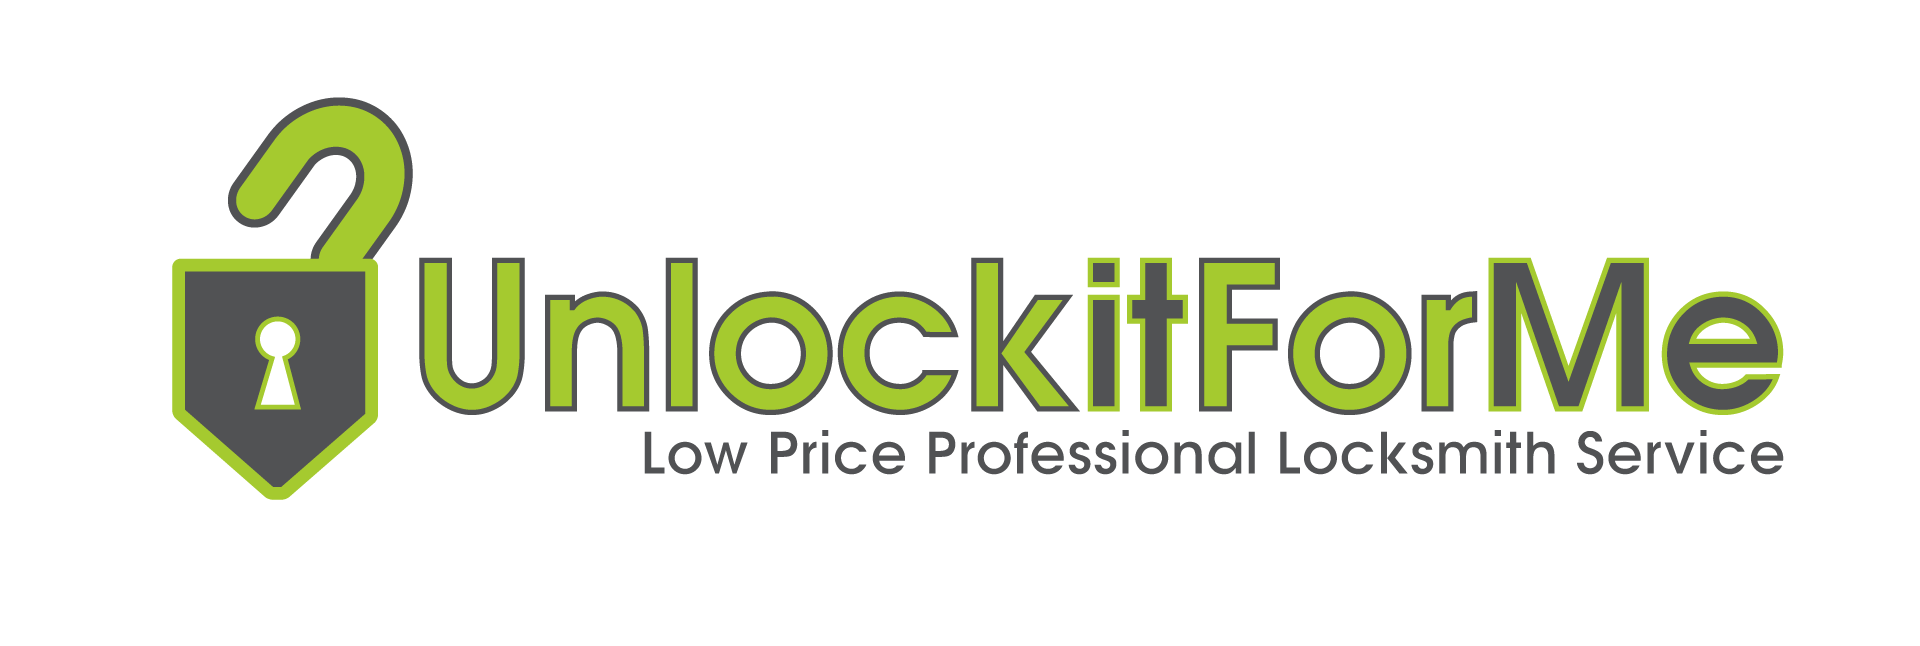 Low Priced Professional Locksmith Service • UnlockItForMe Lock & Key Services